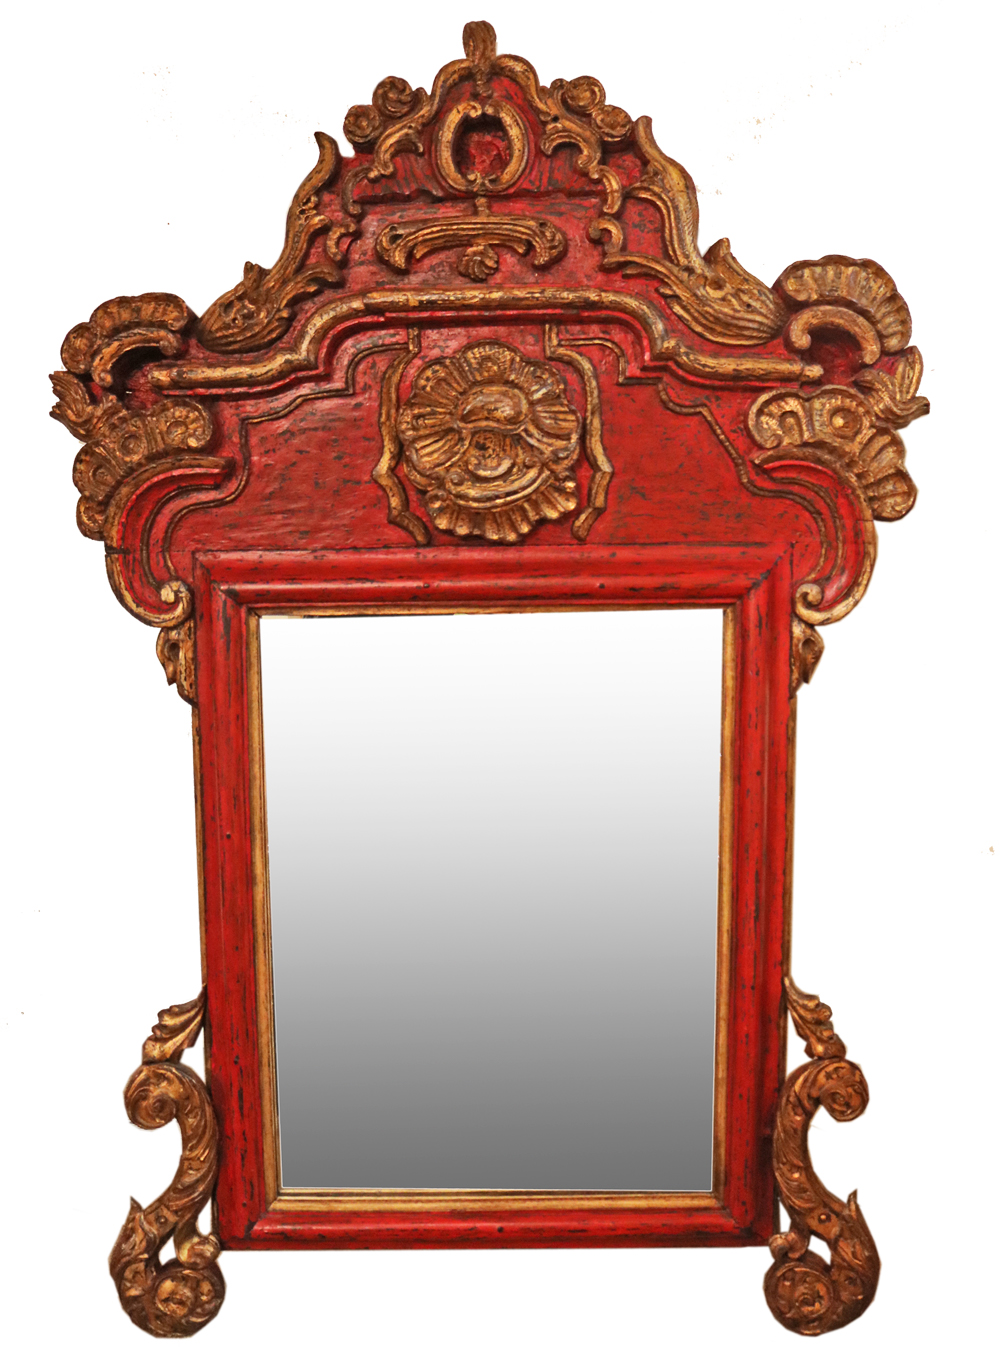 A Rare Portuguese Red Lacquer and Giltwood Mirror No. 4751